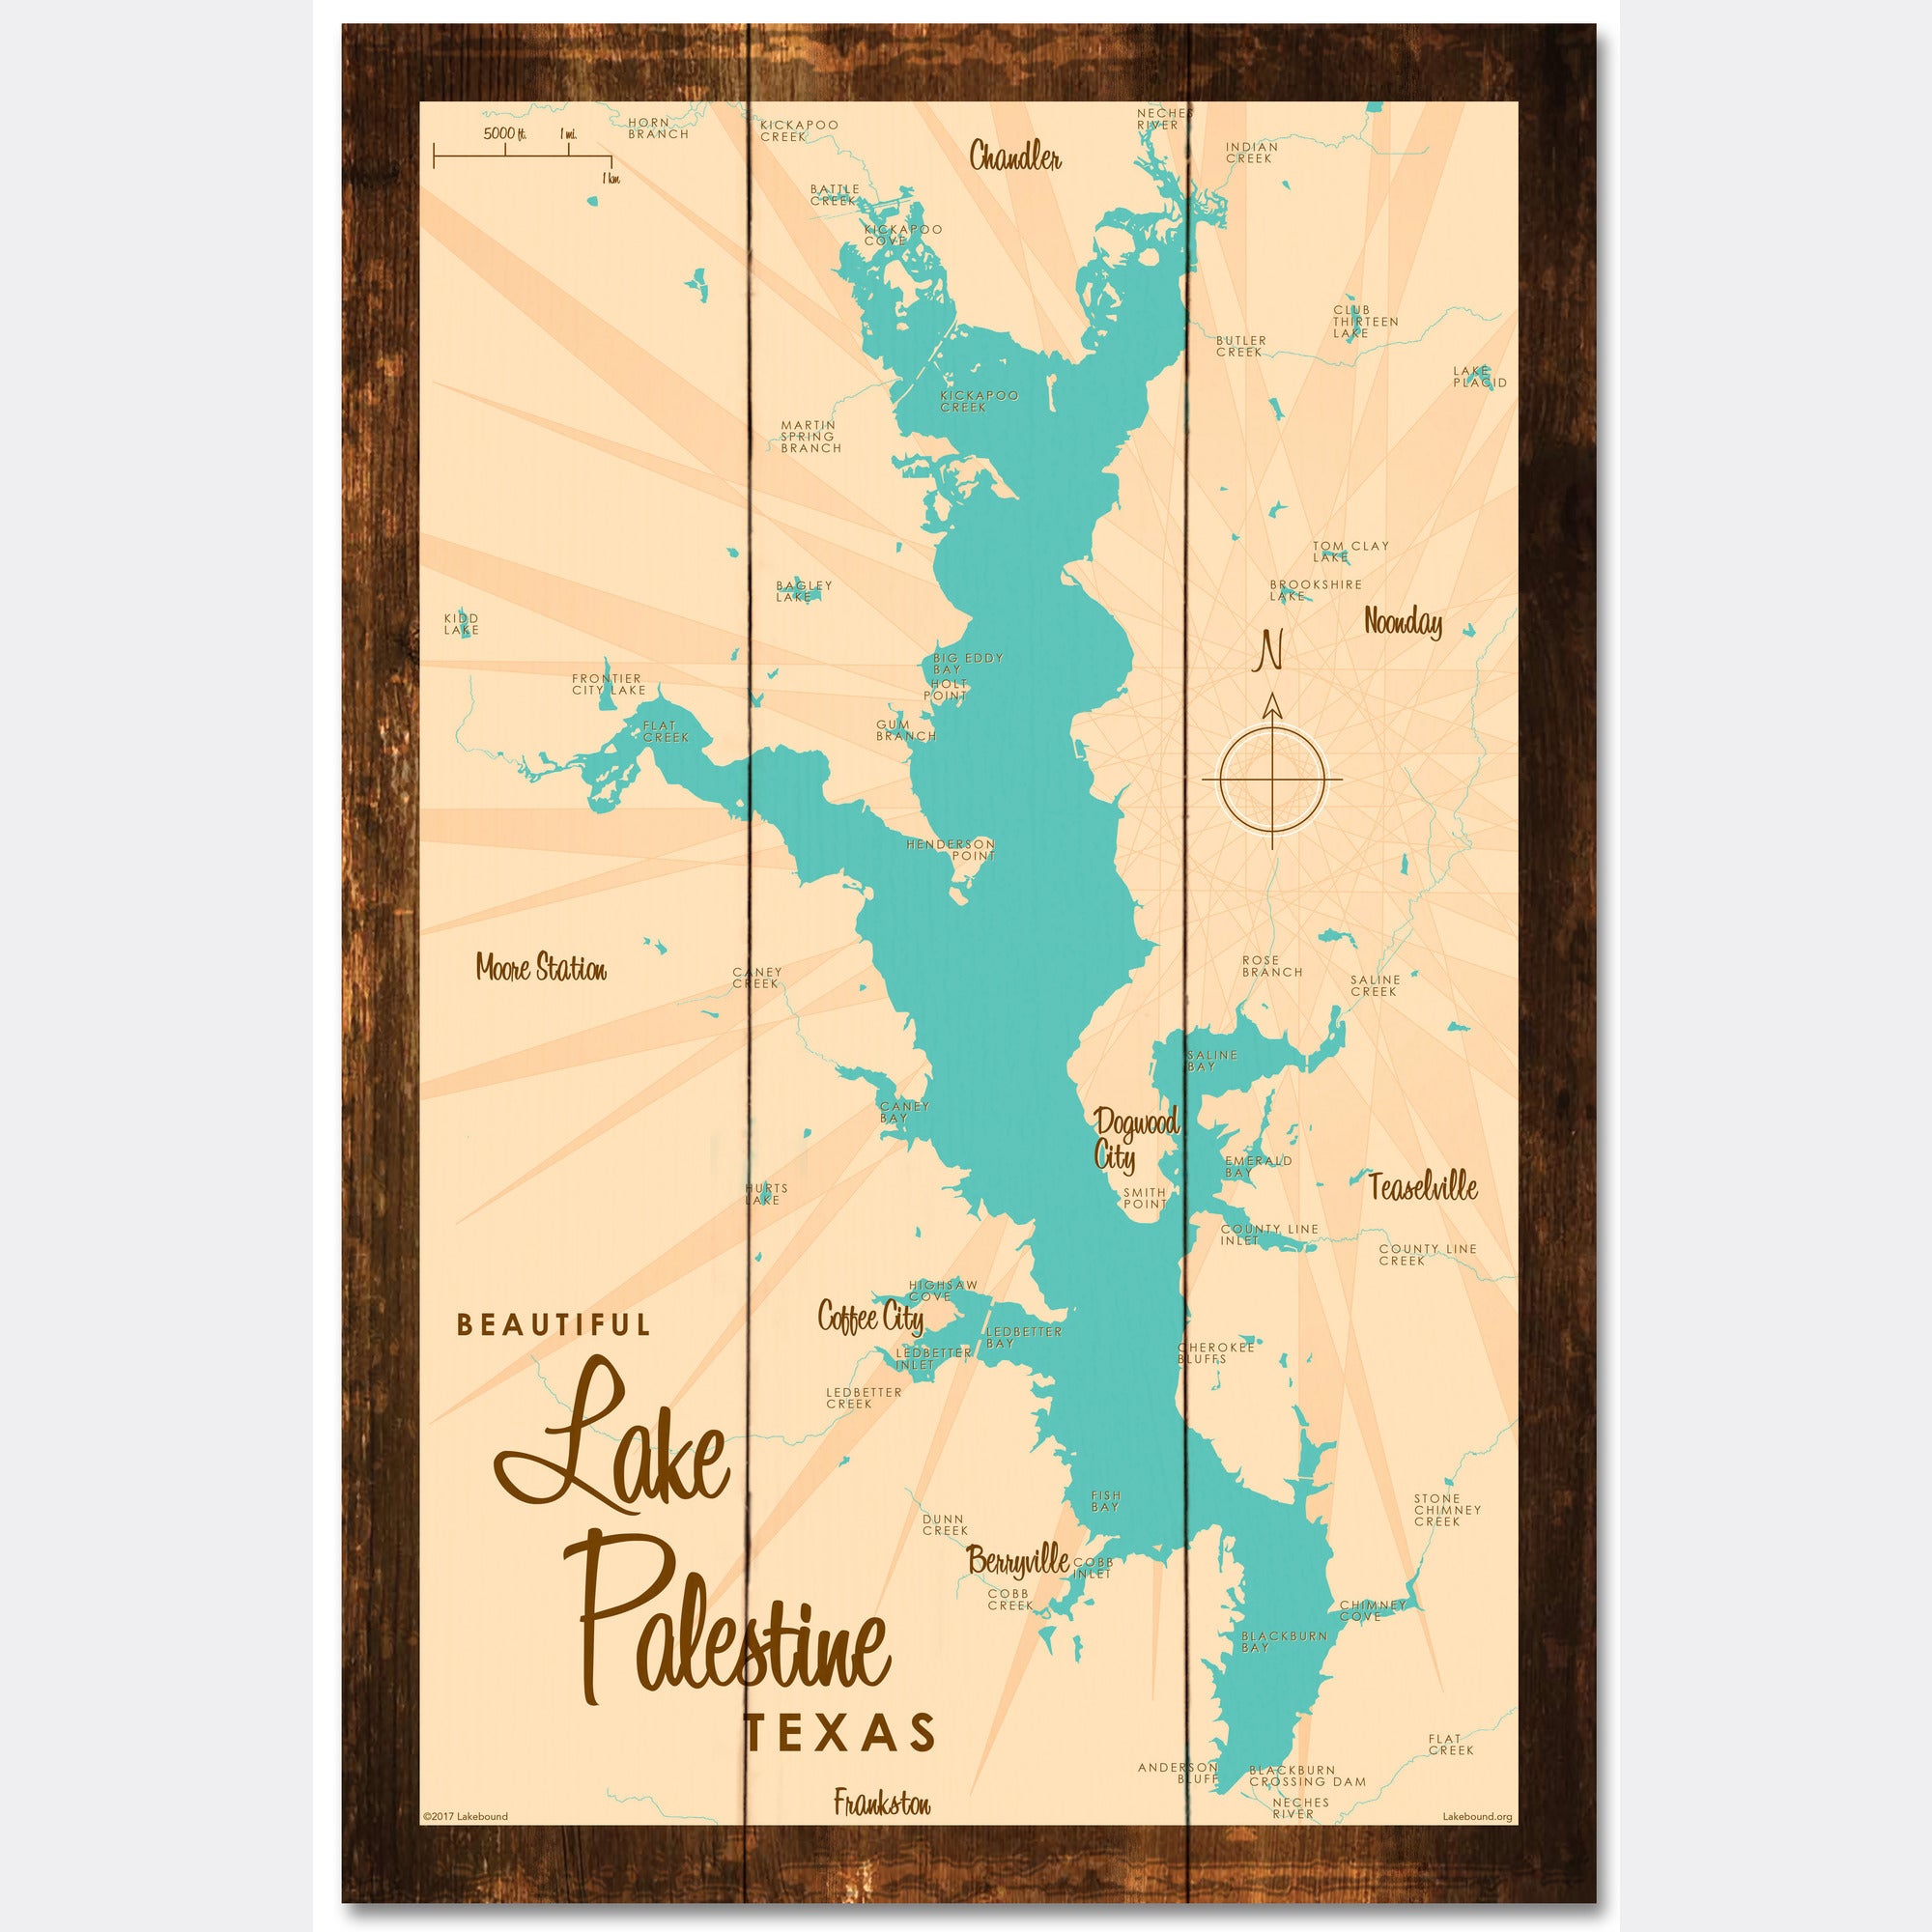 Lake Palestine Texas, Rustic Wood Sign Map Art